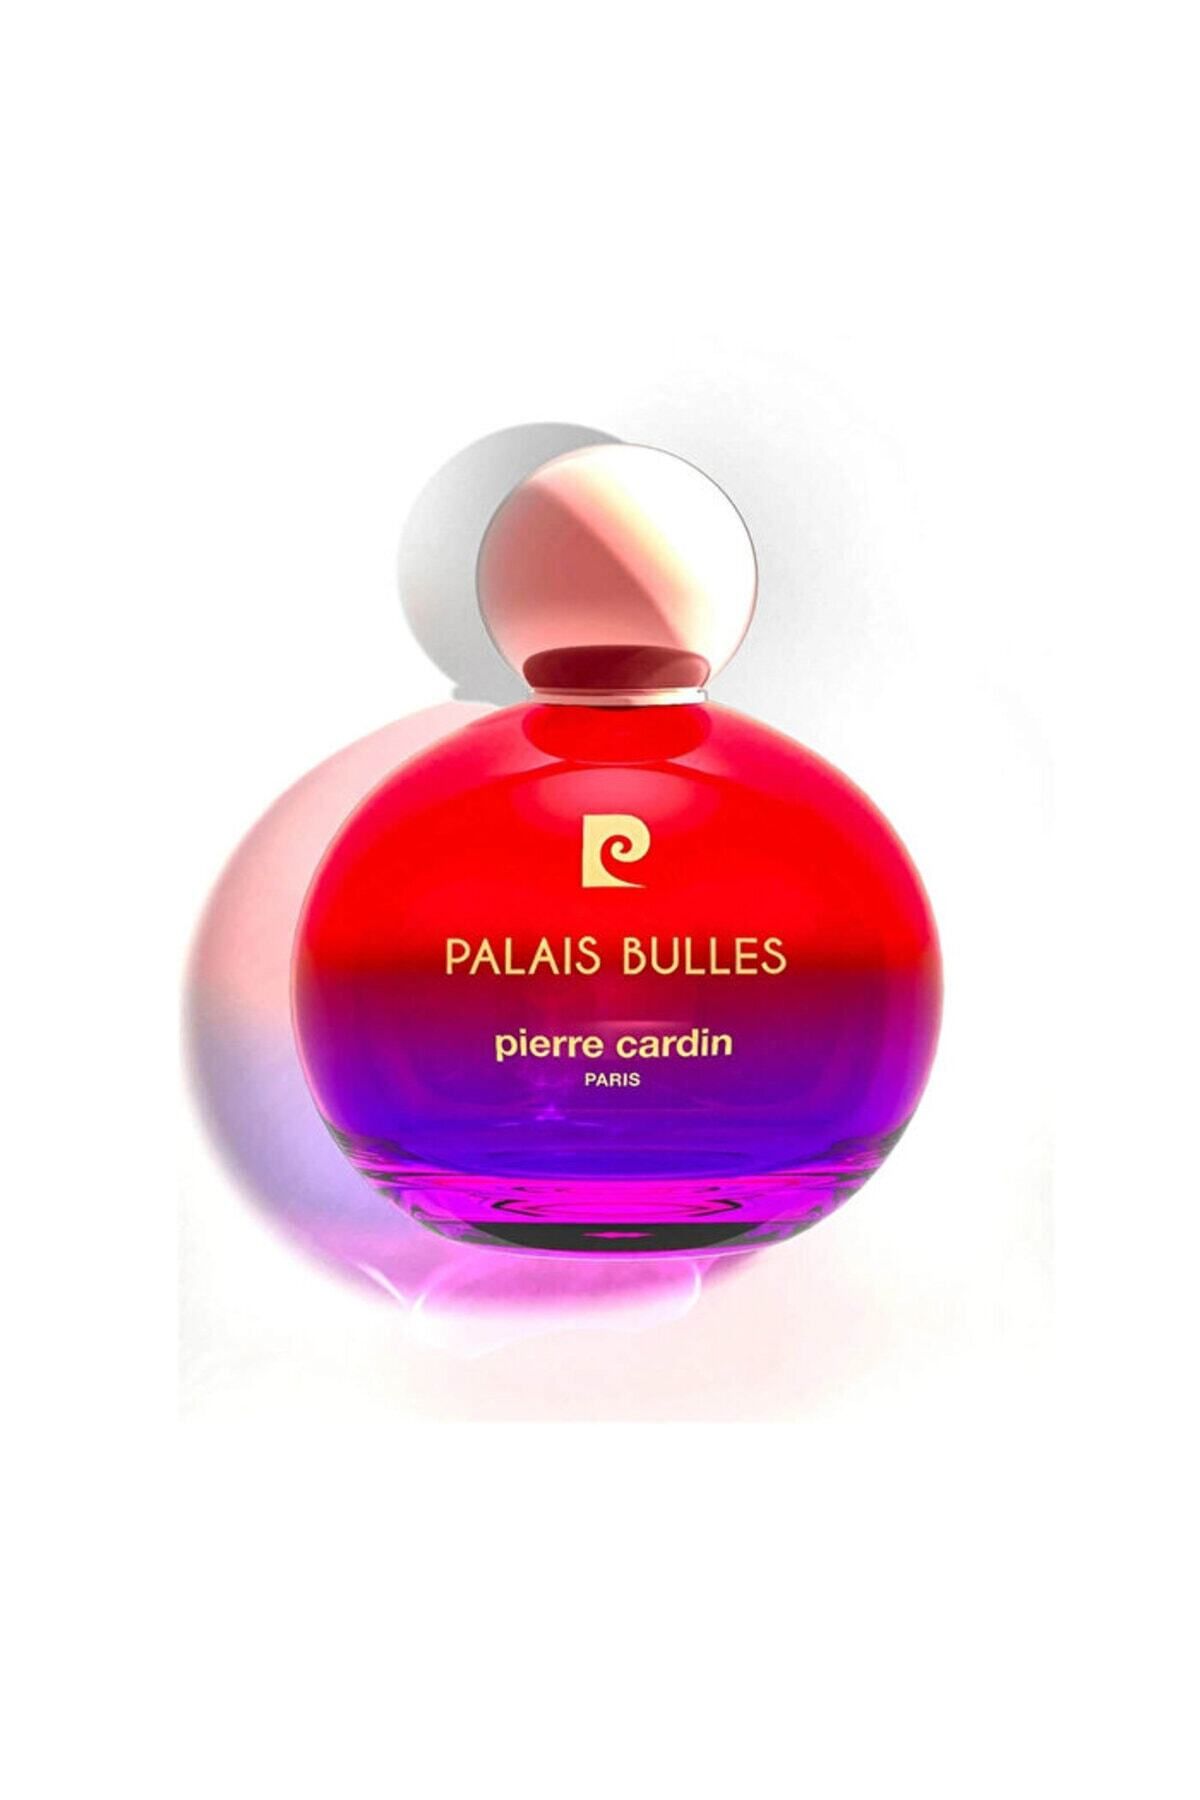 Pierre Cardin Palais Bulles EDP - Women's Perfume - 100 ml